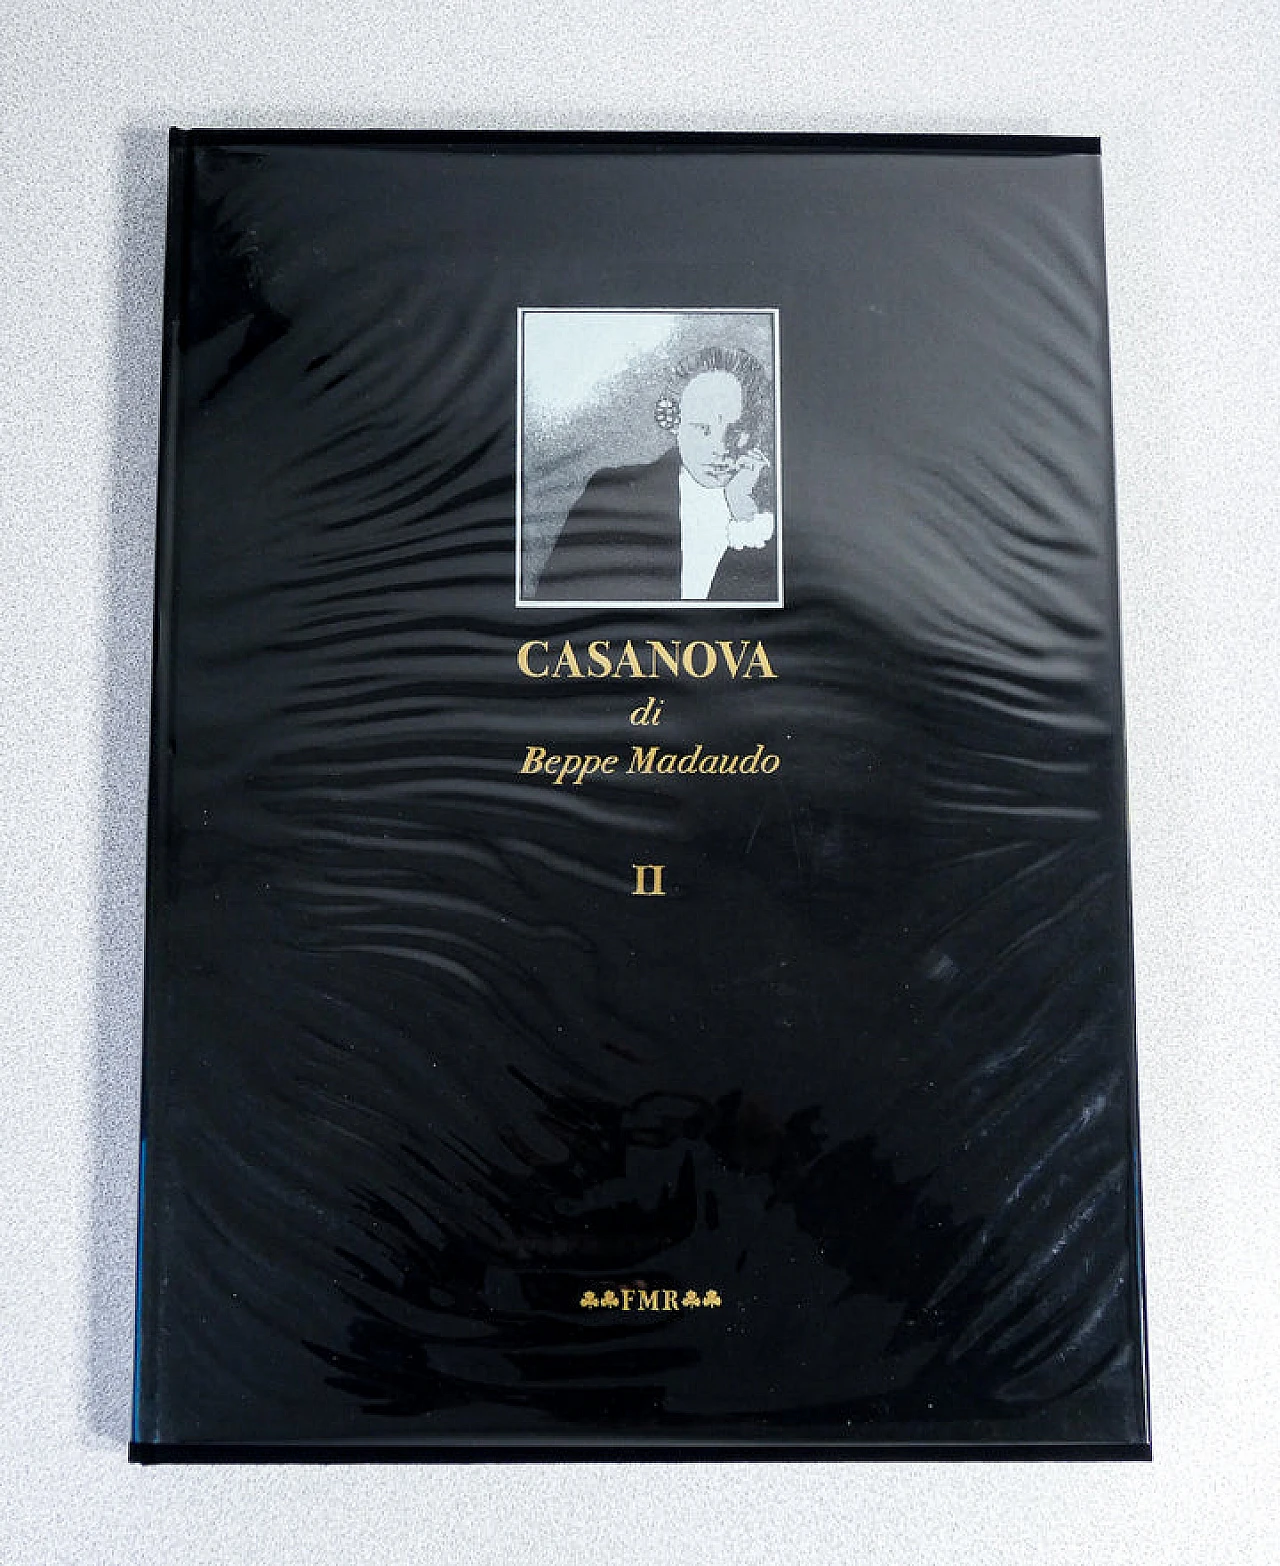 Crepax and Madaudo, Casanova, pair of volumes, FMR Editore, 1977 11